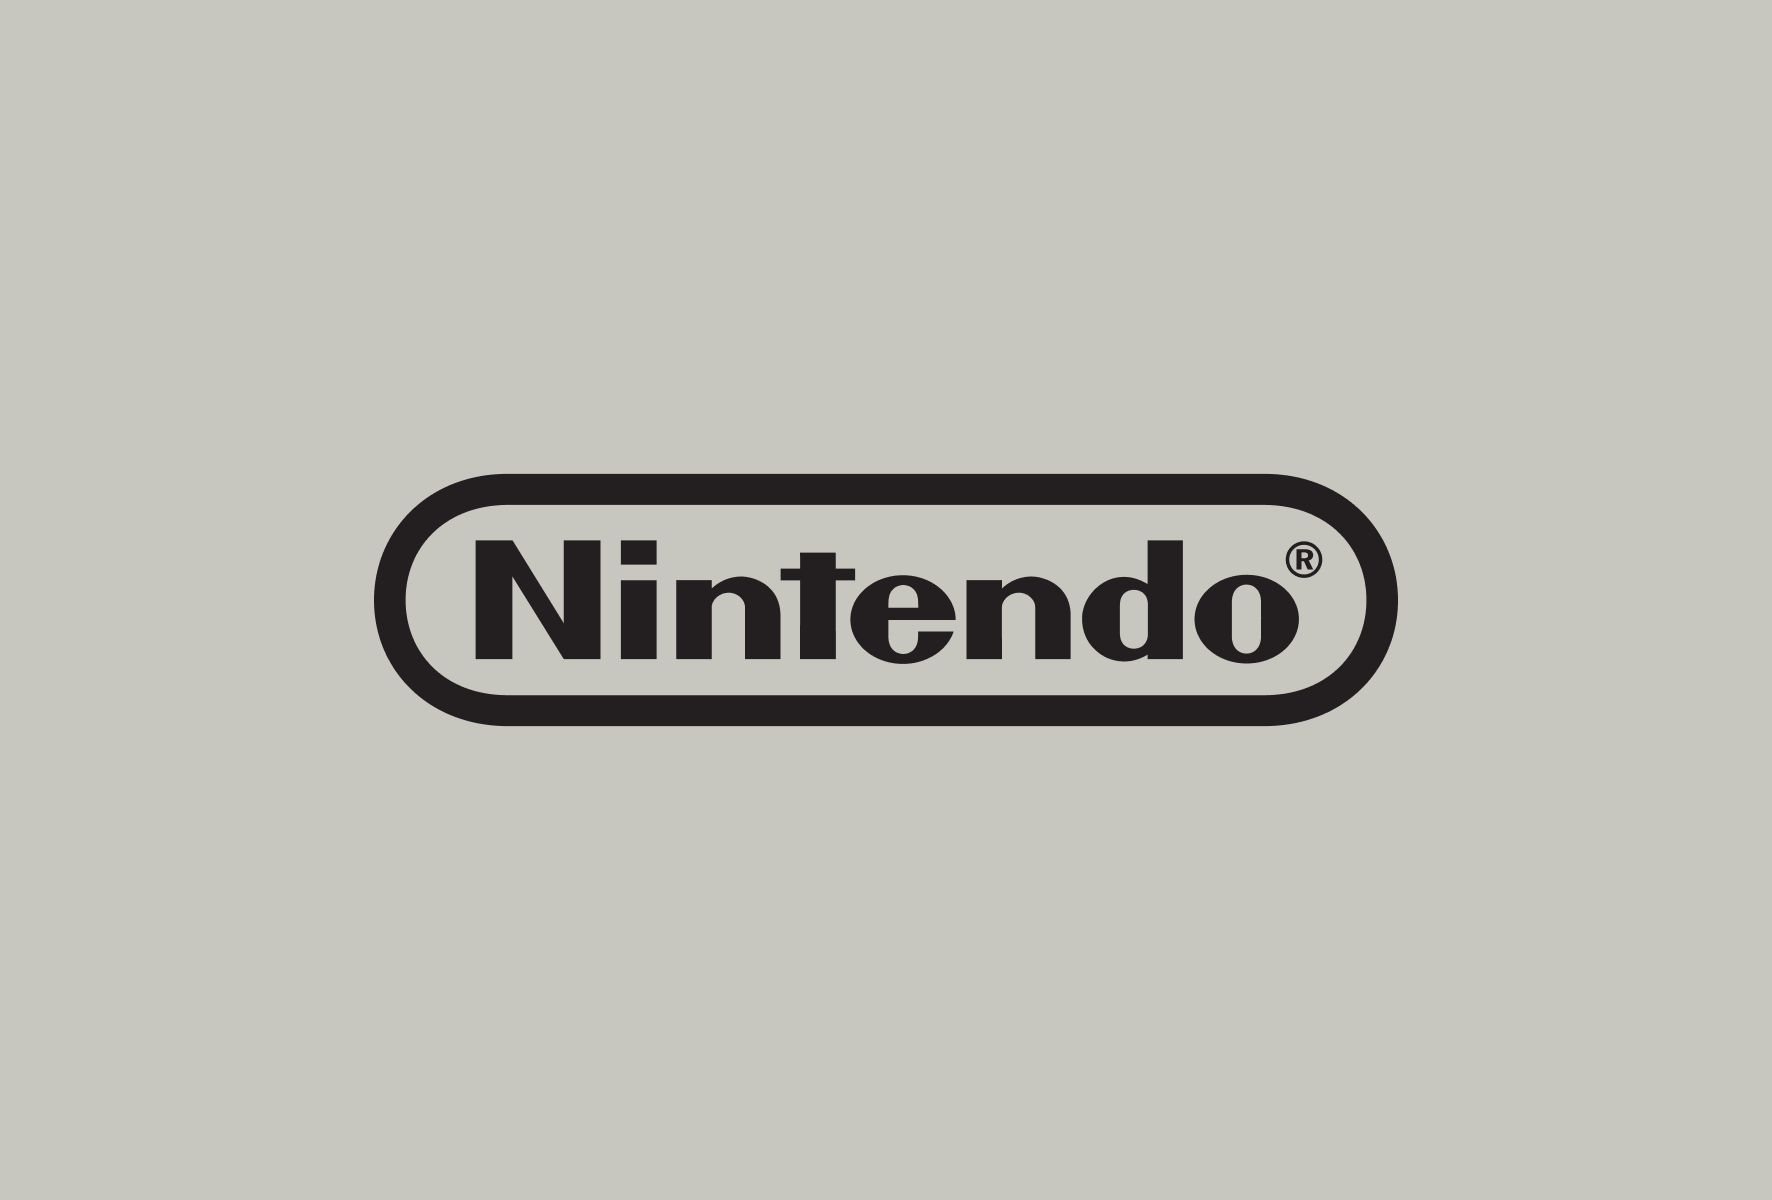 Famous Logos Part IX: Nintendo